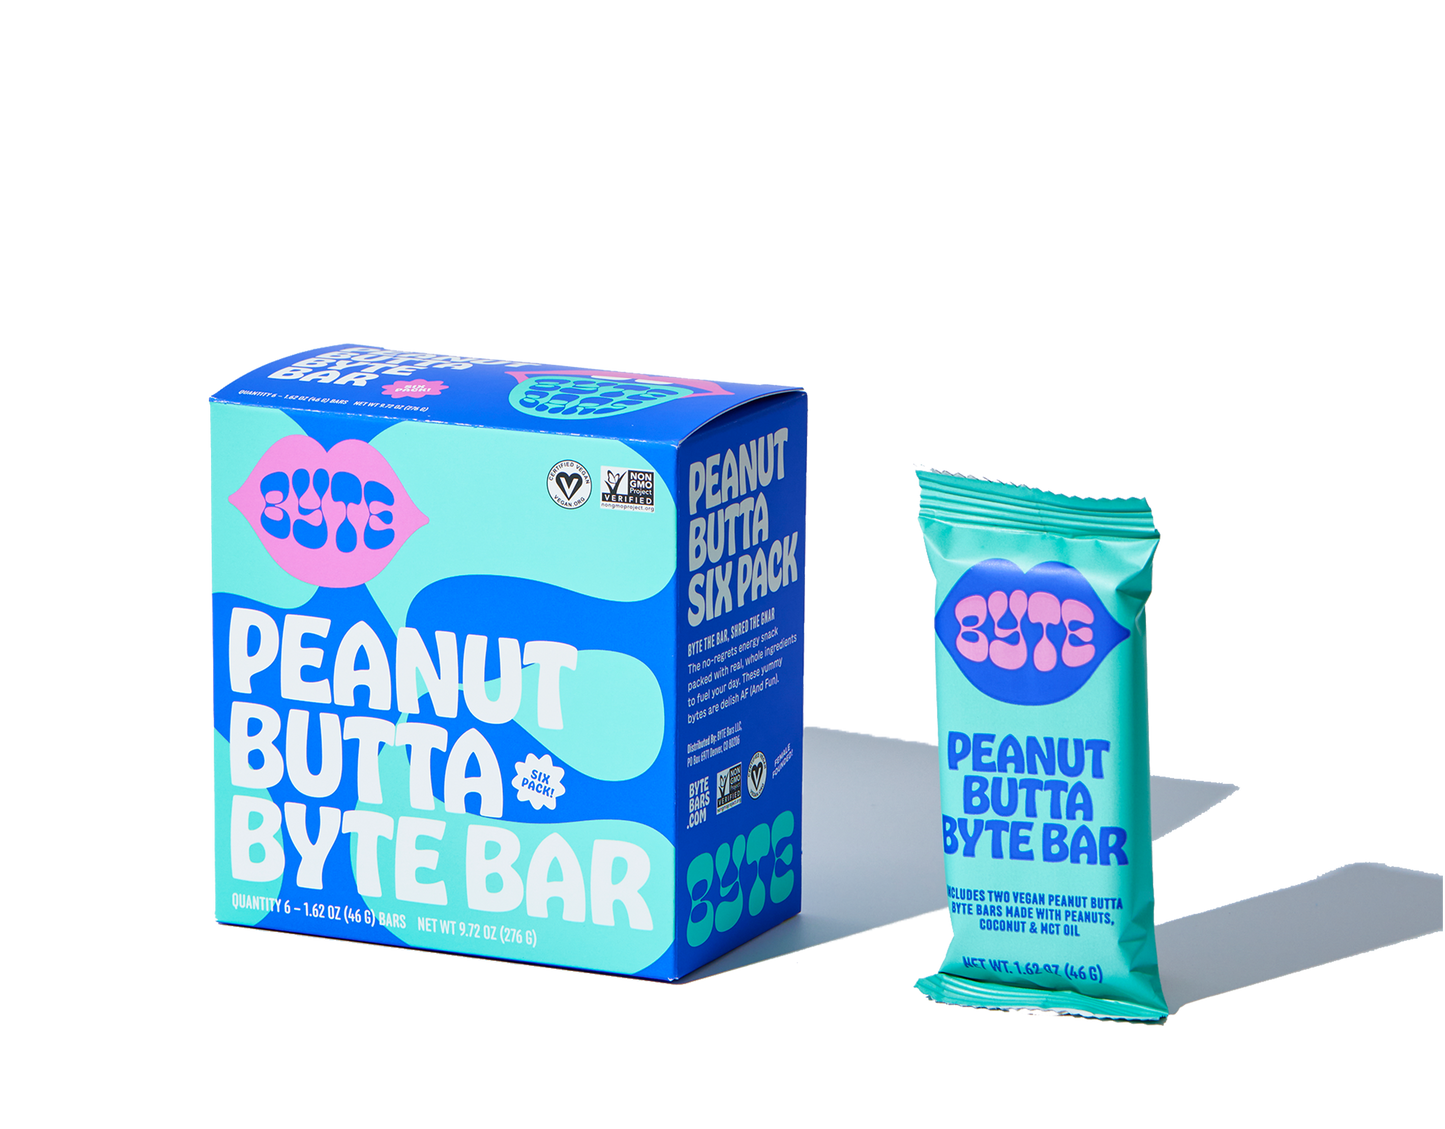 Peanut Butta Byte Bar